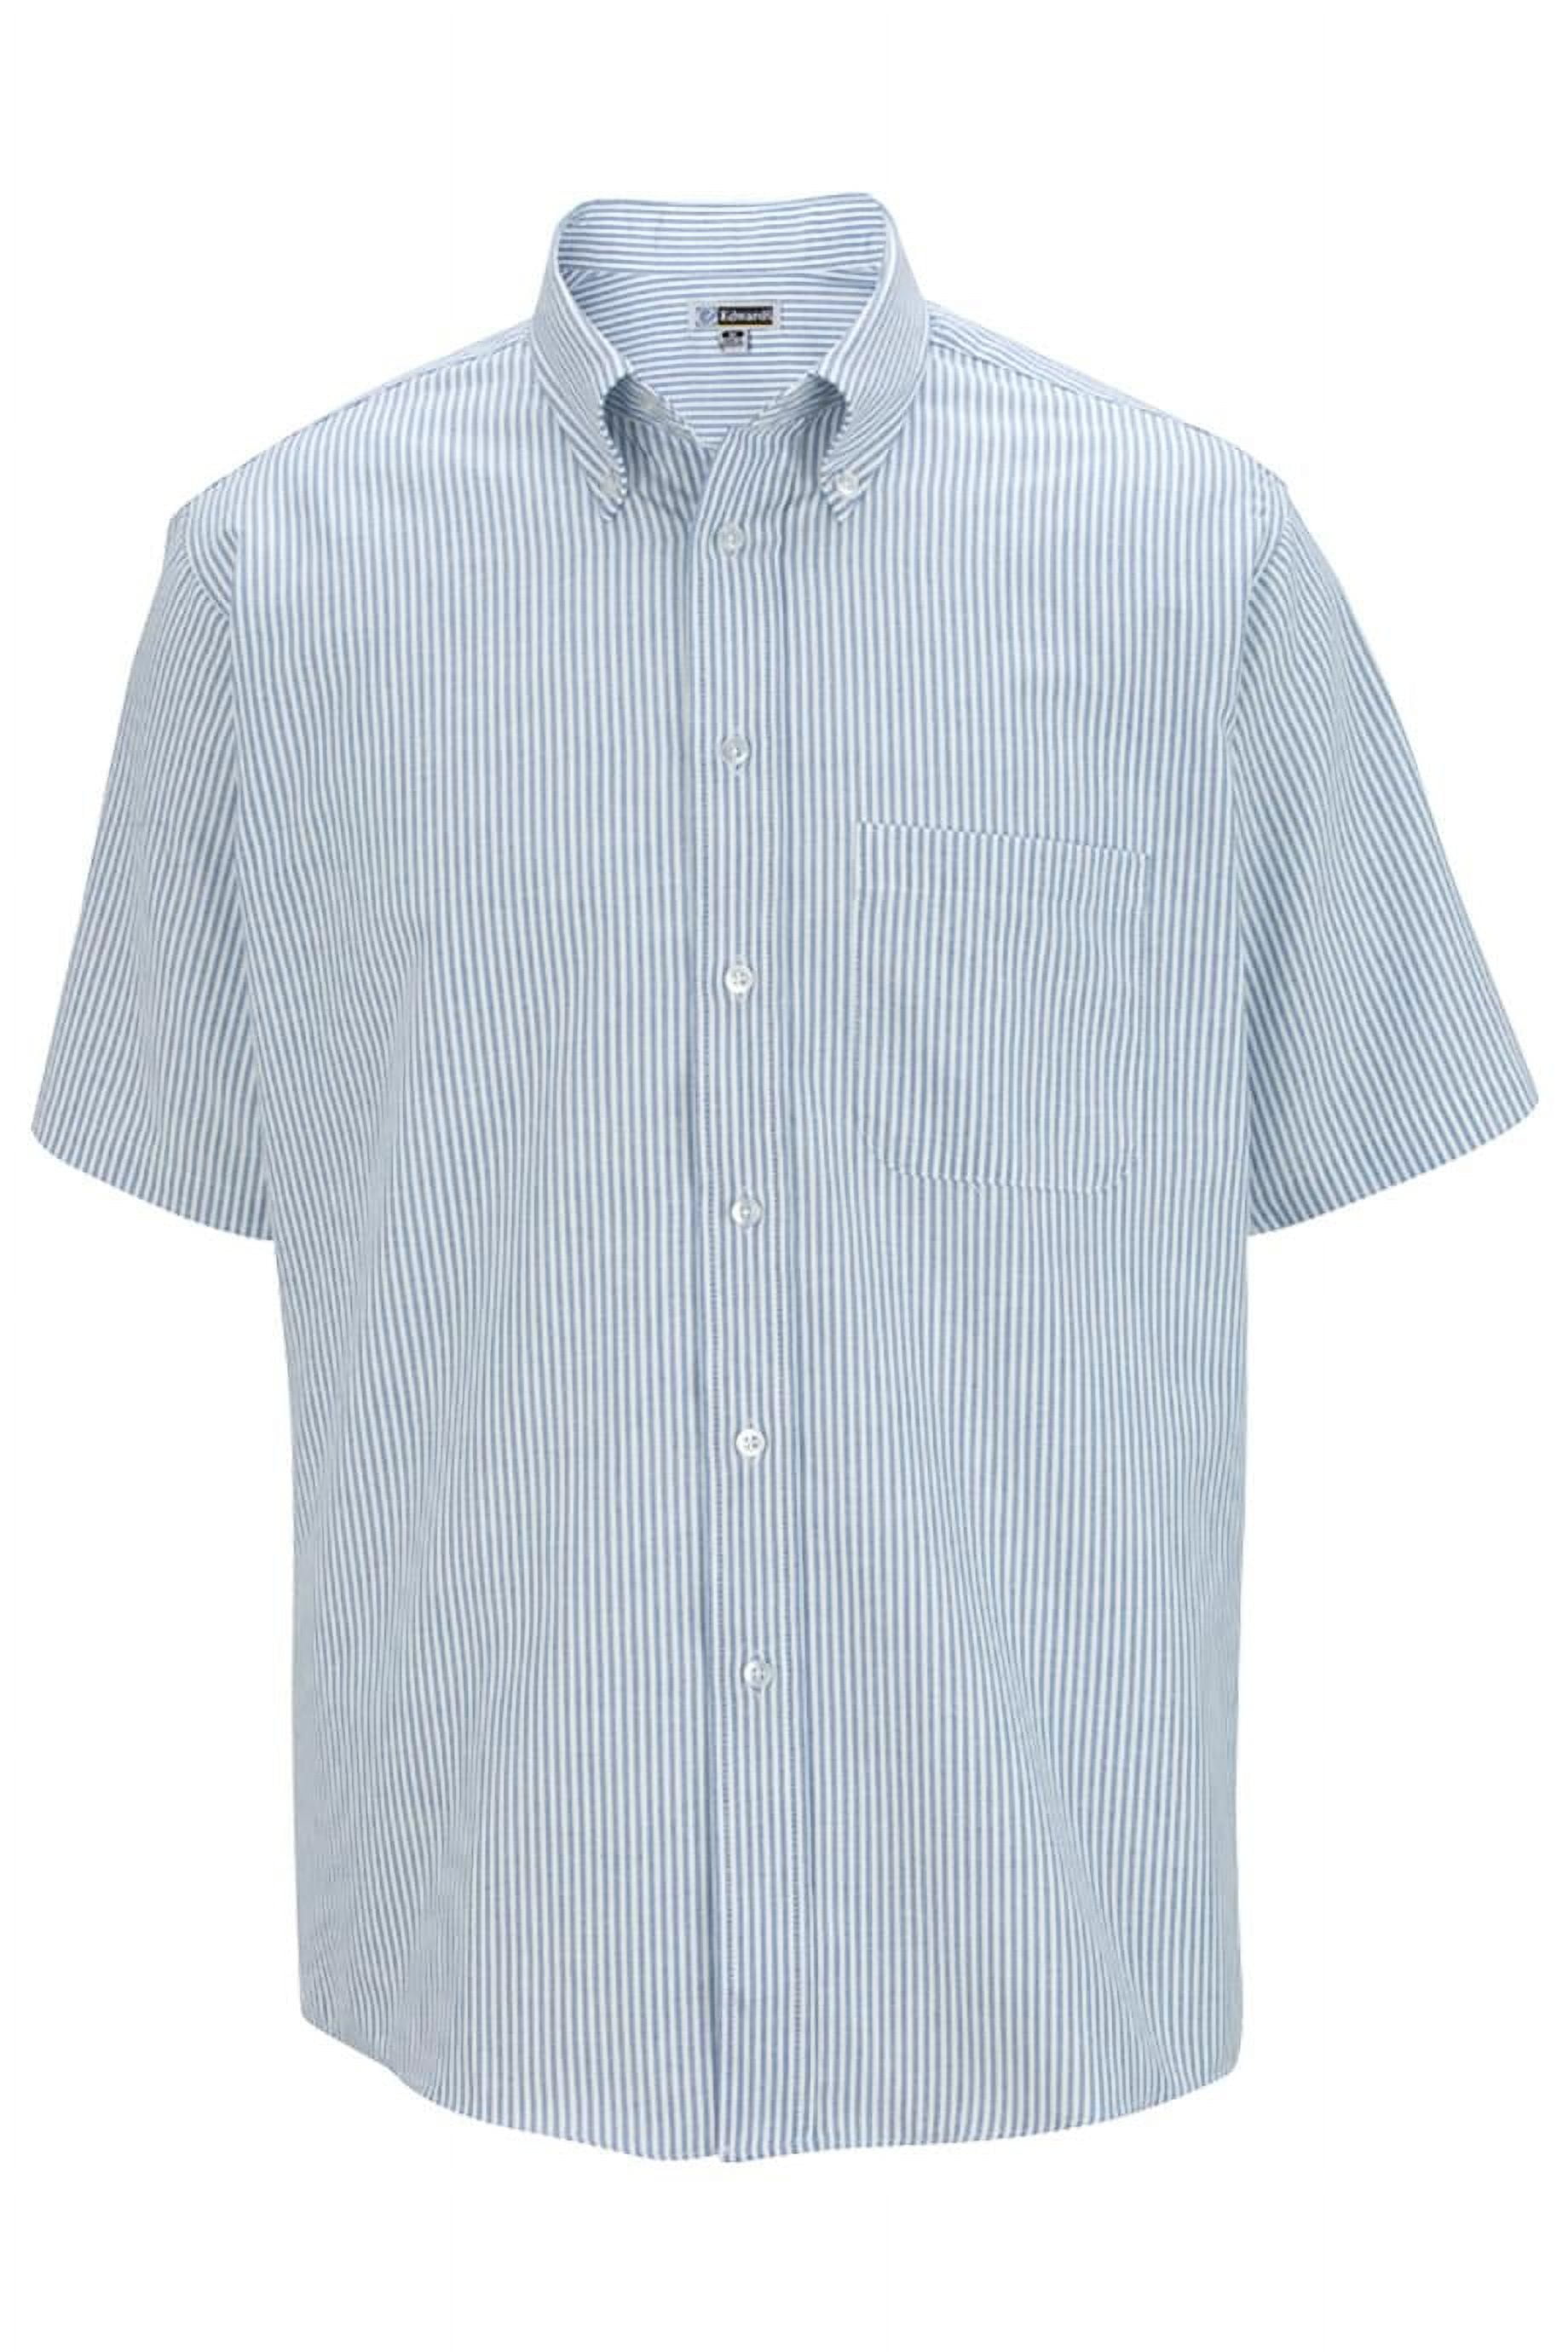 Edwards Men's Short Sleeve Oxford Shirt - Walmart.com